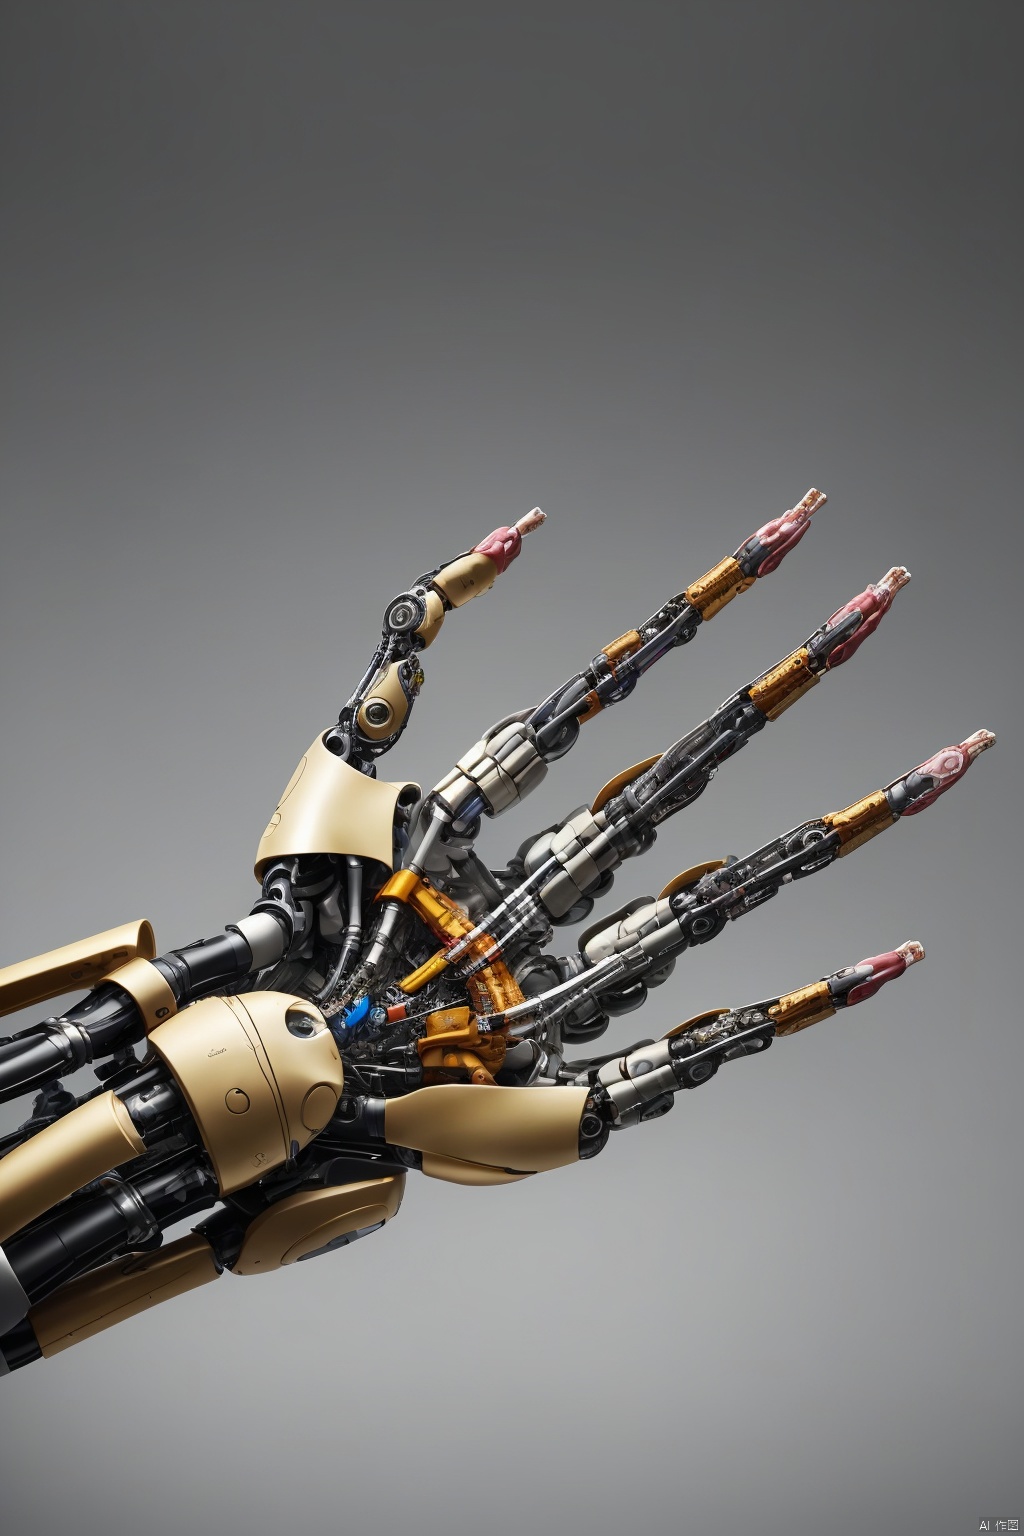  A robot hand, bionic human bone., A robotic prosthesis